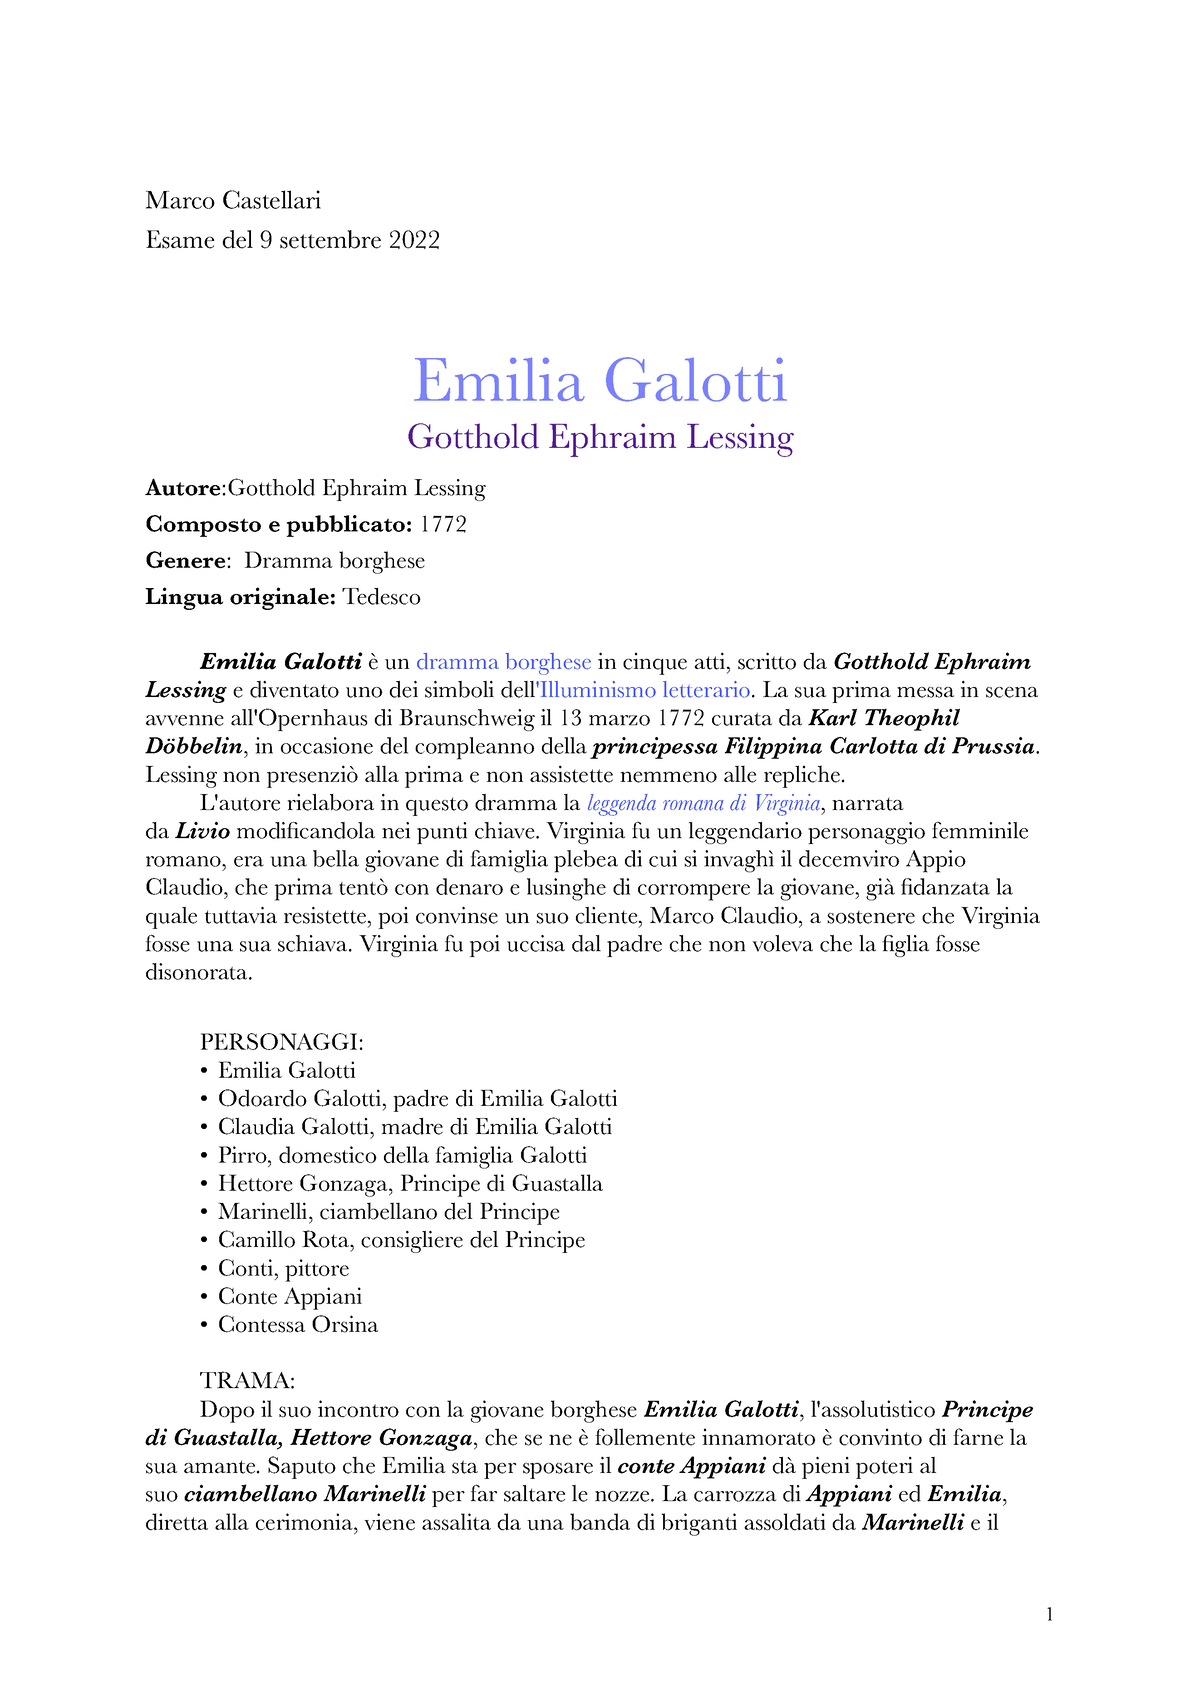 Emilia Galotti - G.E. Lessing - Marco Castellari Esame del 9 settembre 2022 Emilia  Galotti Gotthold - Studocu